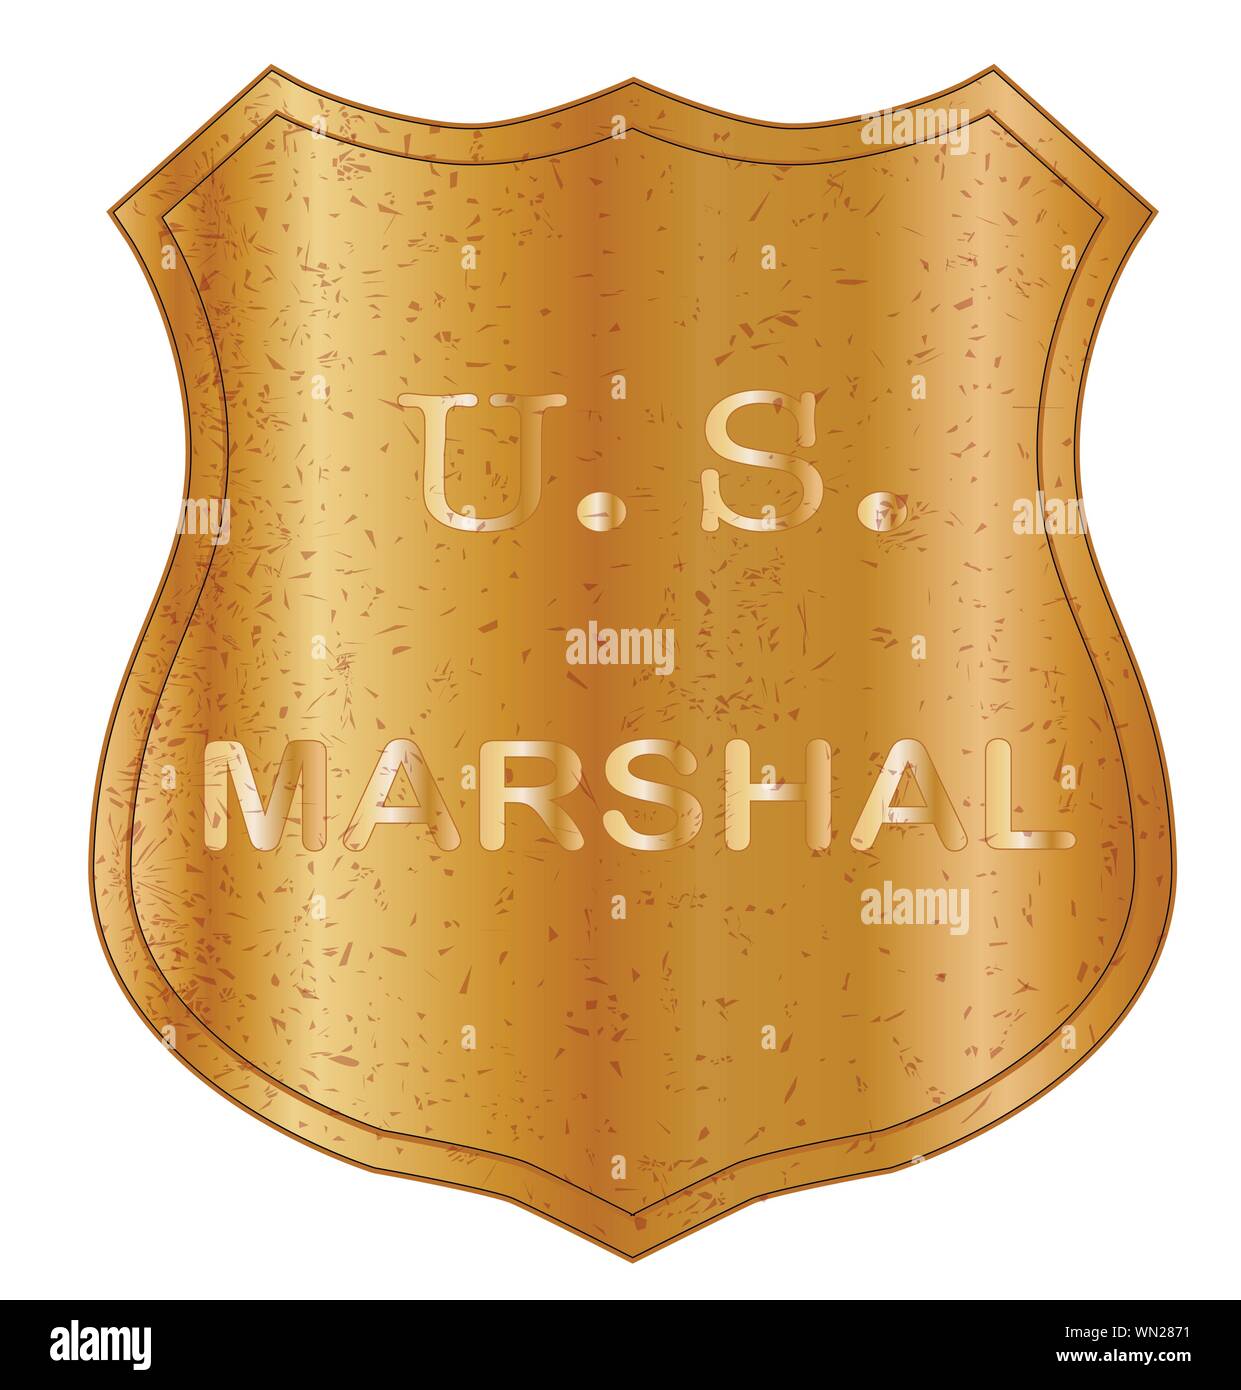 United States Marshal Shield Badge Stock Vector